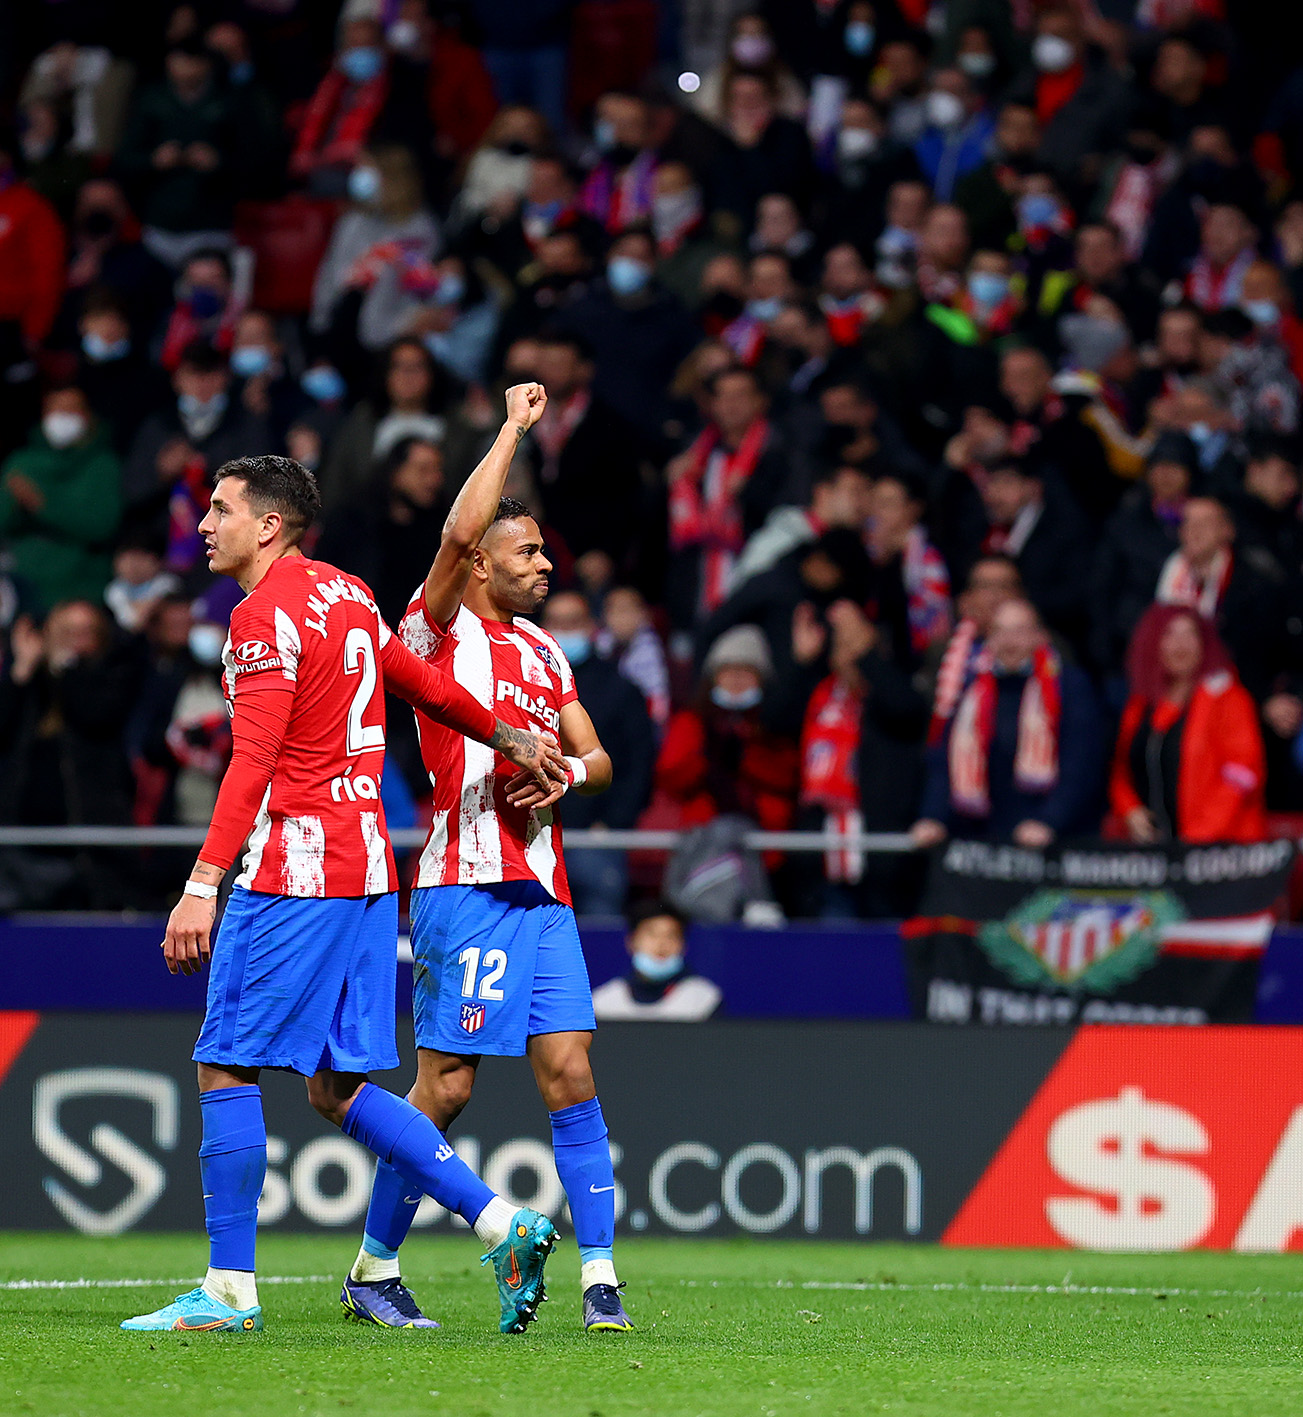 ESPANHOL: Renan Lodi brilha com 2 gols e Atlético de Madrid vence Celta